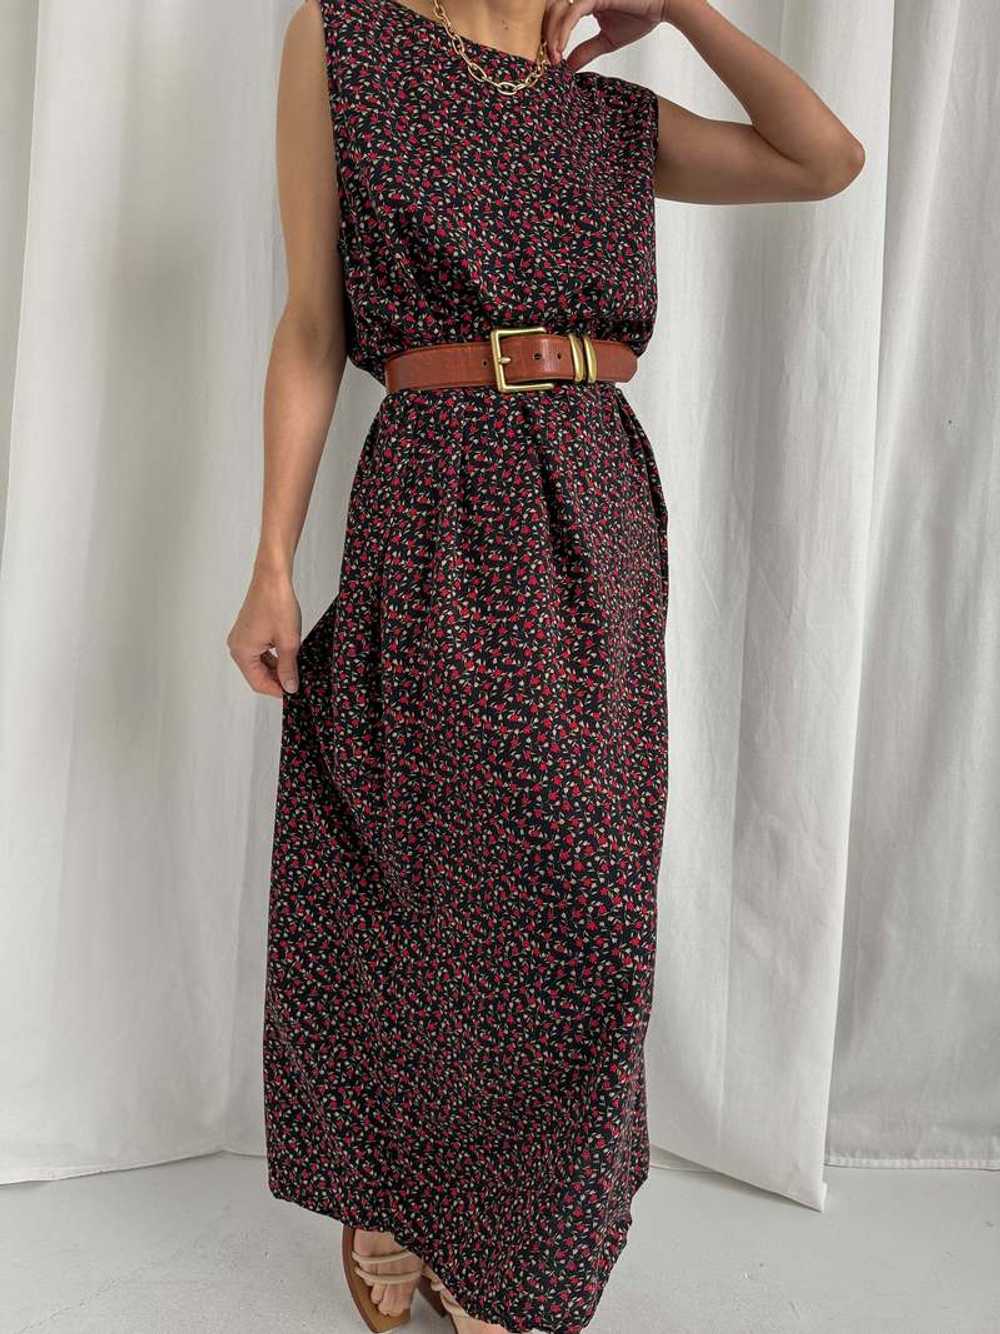 Vintage Sleeveless Maxi Dress - Cocoa/Floral - image 2